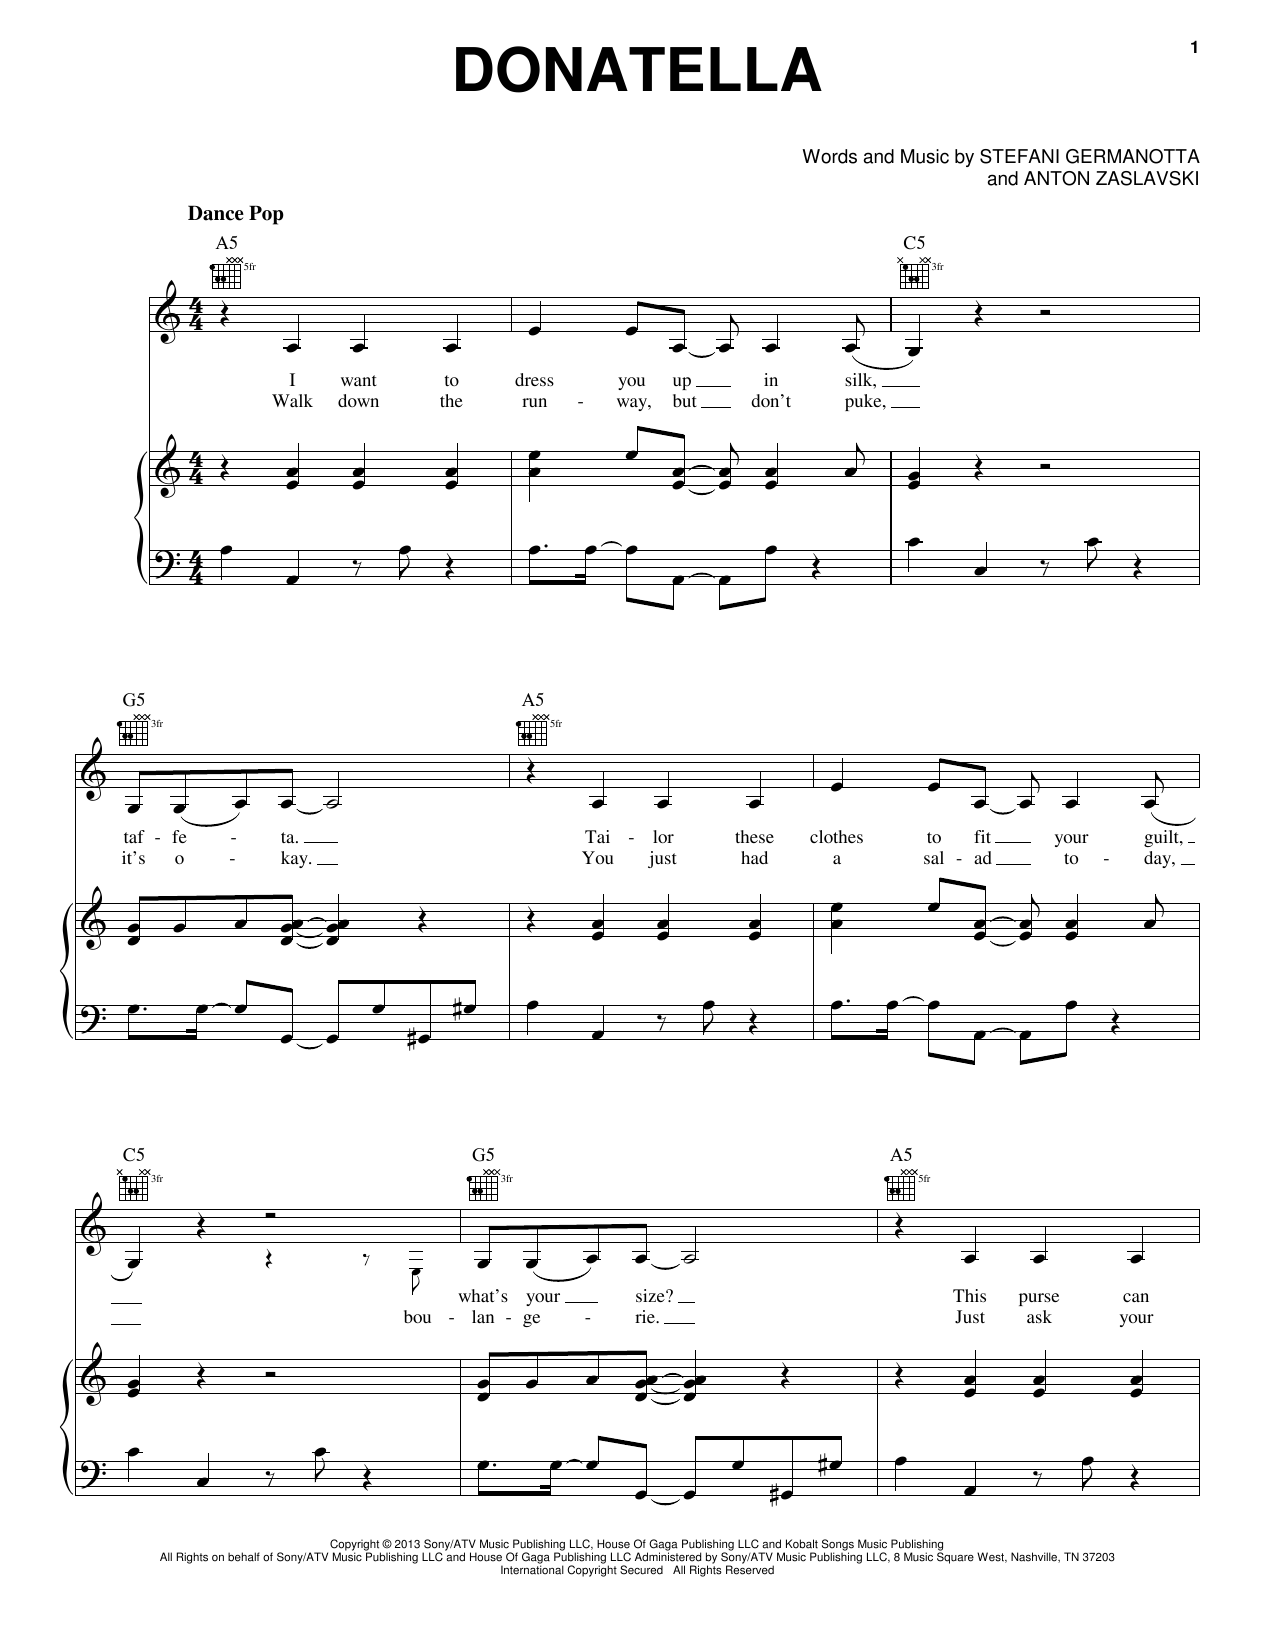 Lady Gaga Donatella Sheet Music Notes & Chords for Piano, Vocal & Guitar (Right-Hand Melody) - Download or Print PDF